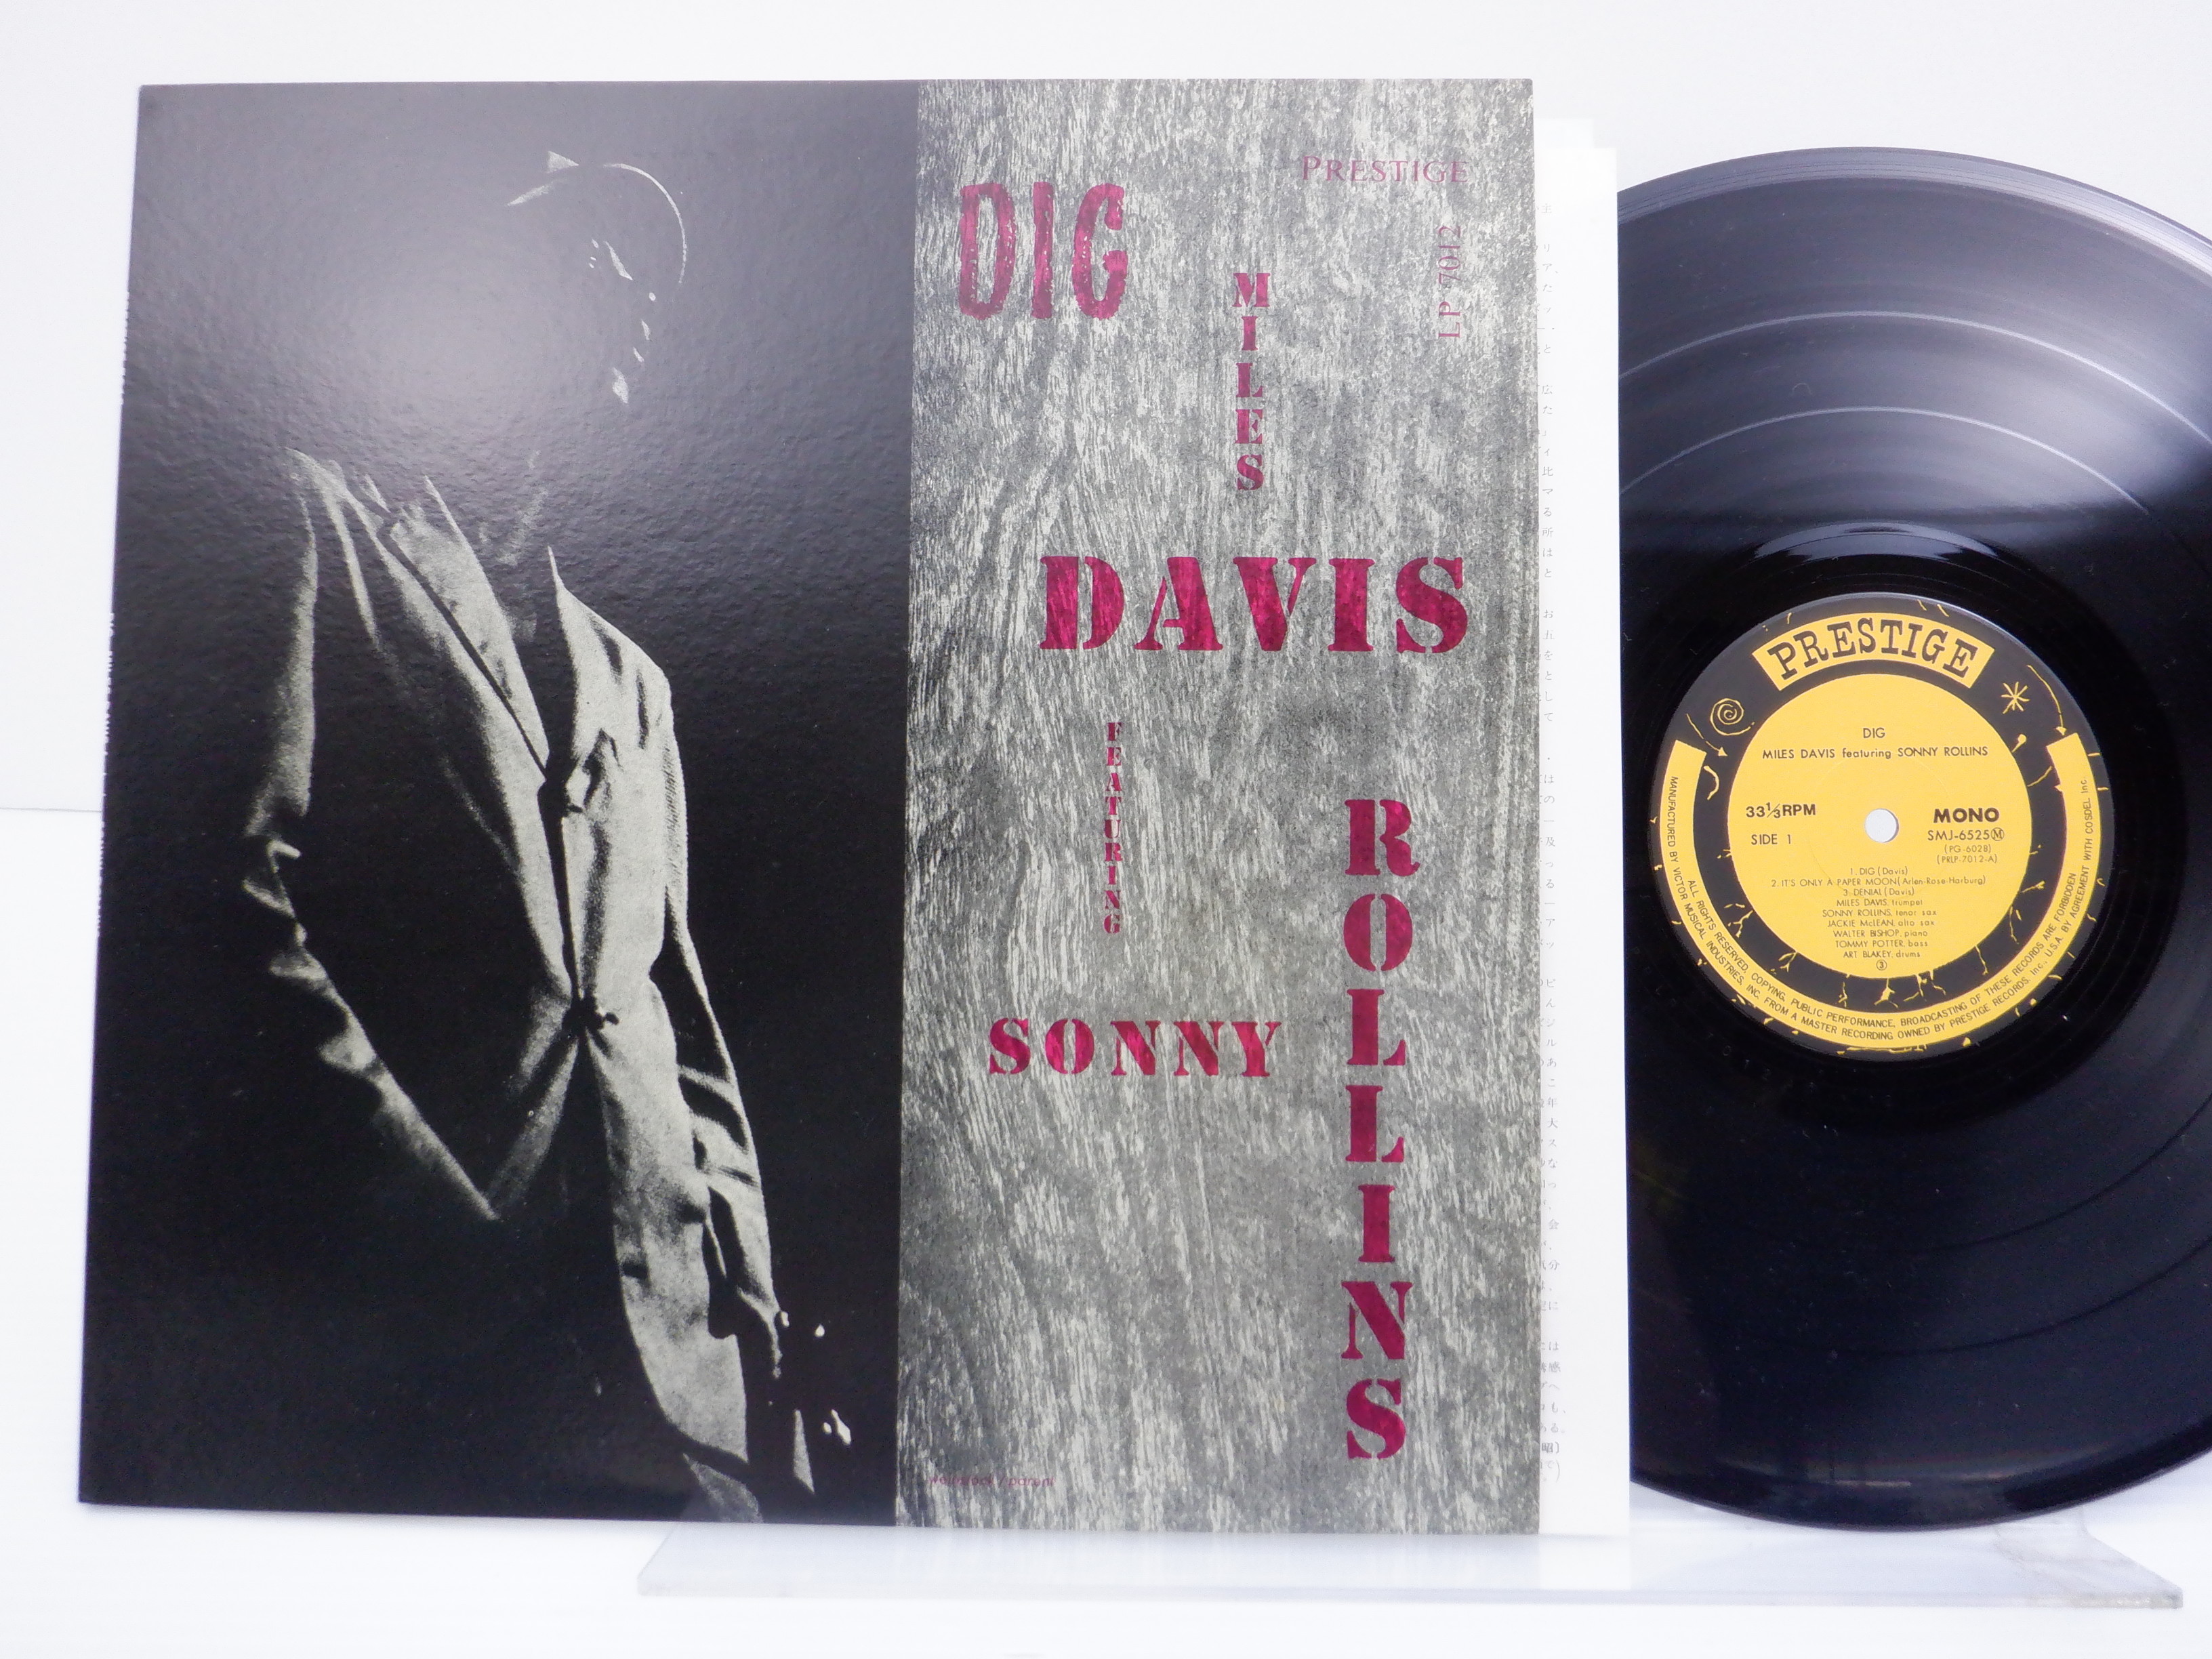 Cookin' - Miles Davis 2×45rpm 高音質プレス-